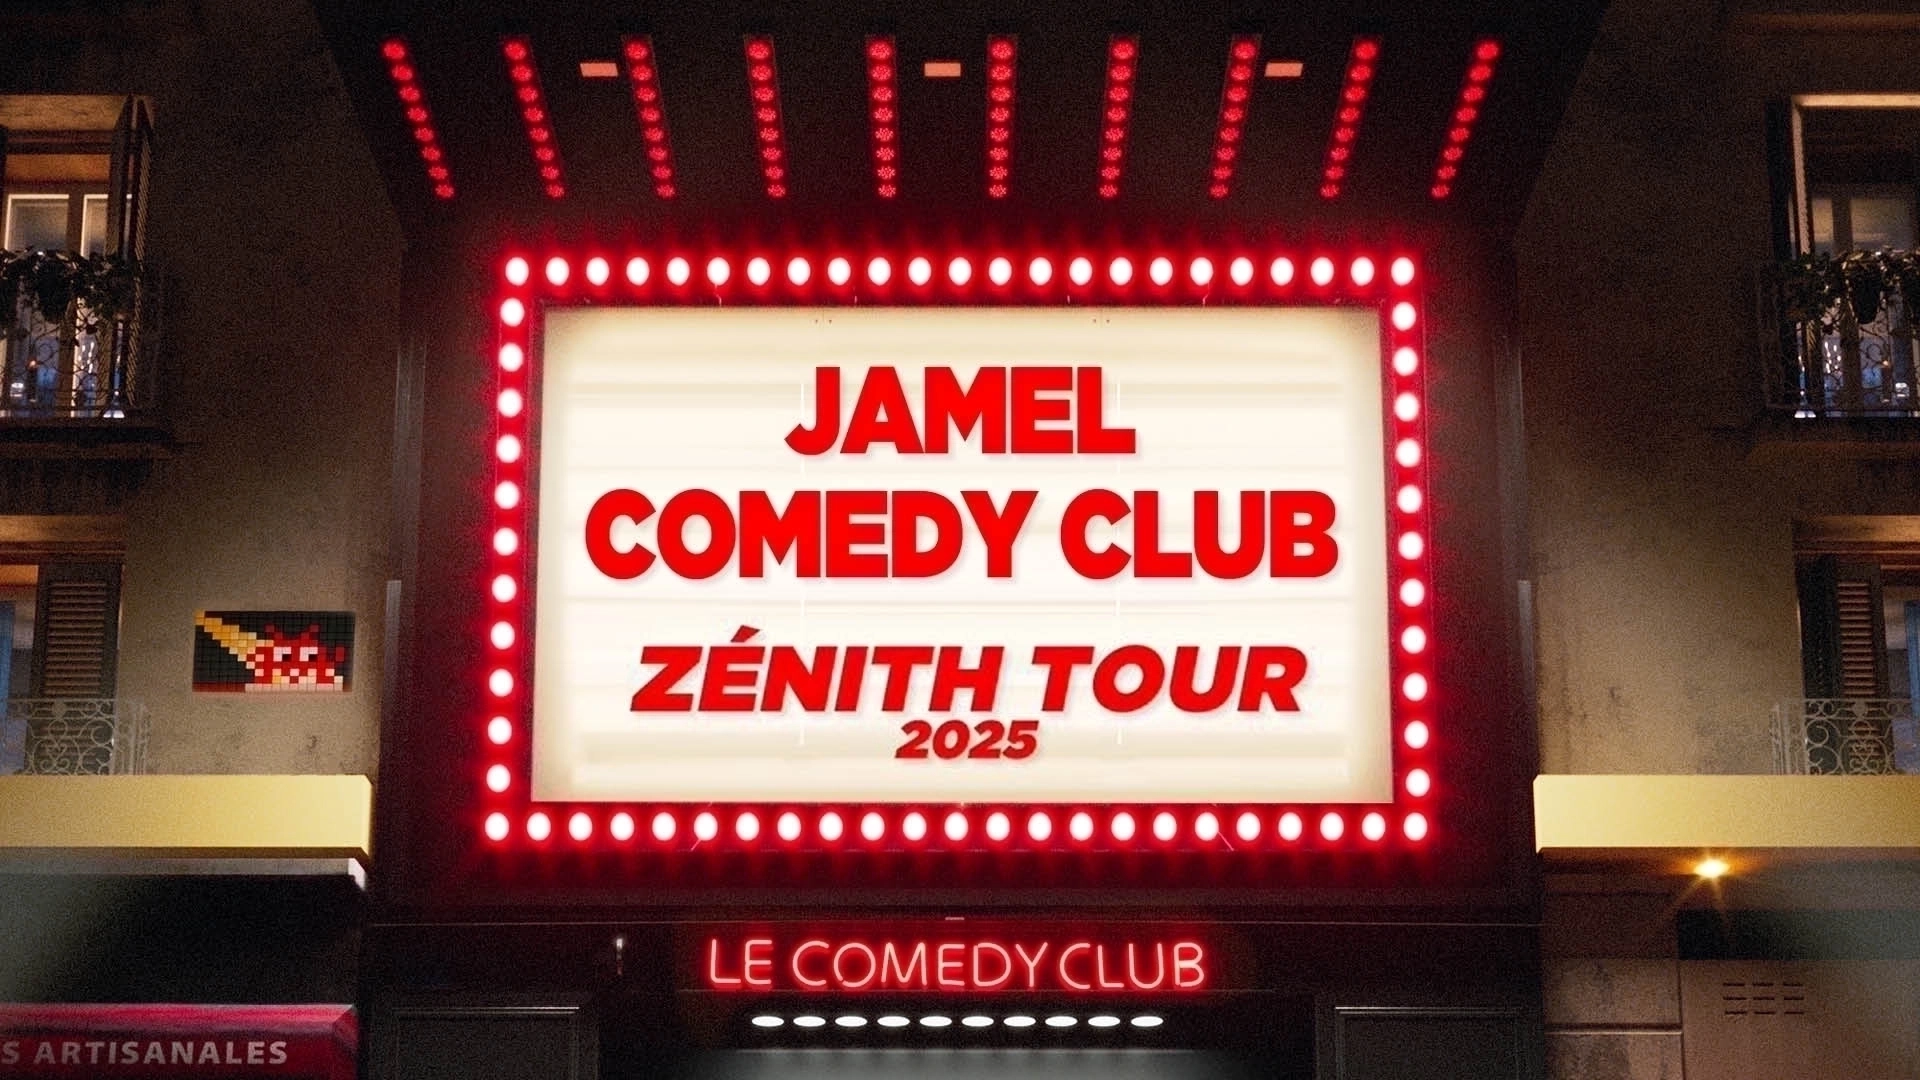 Jamel Comedy Club Zenith Tour 2025 at L'amphitheatre Tickets